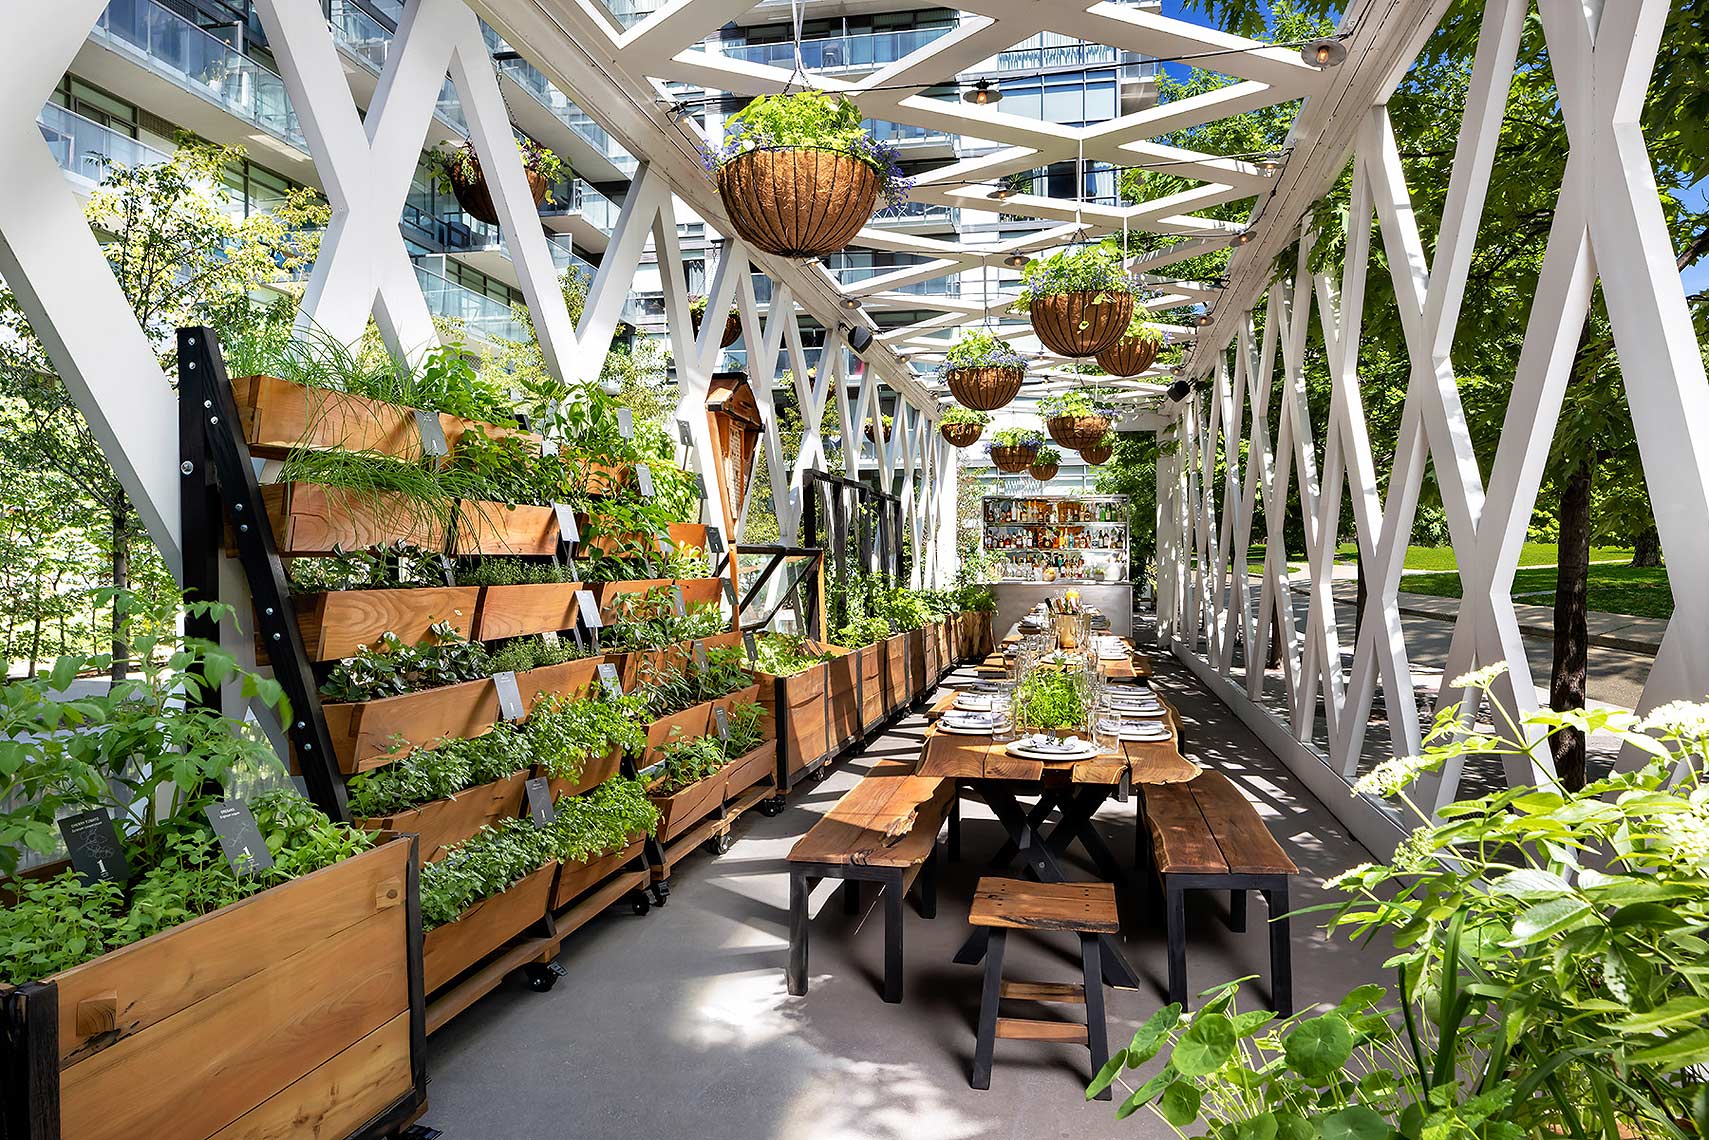 1 Hotel Toronto - The Garden Pavilion